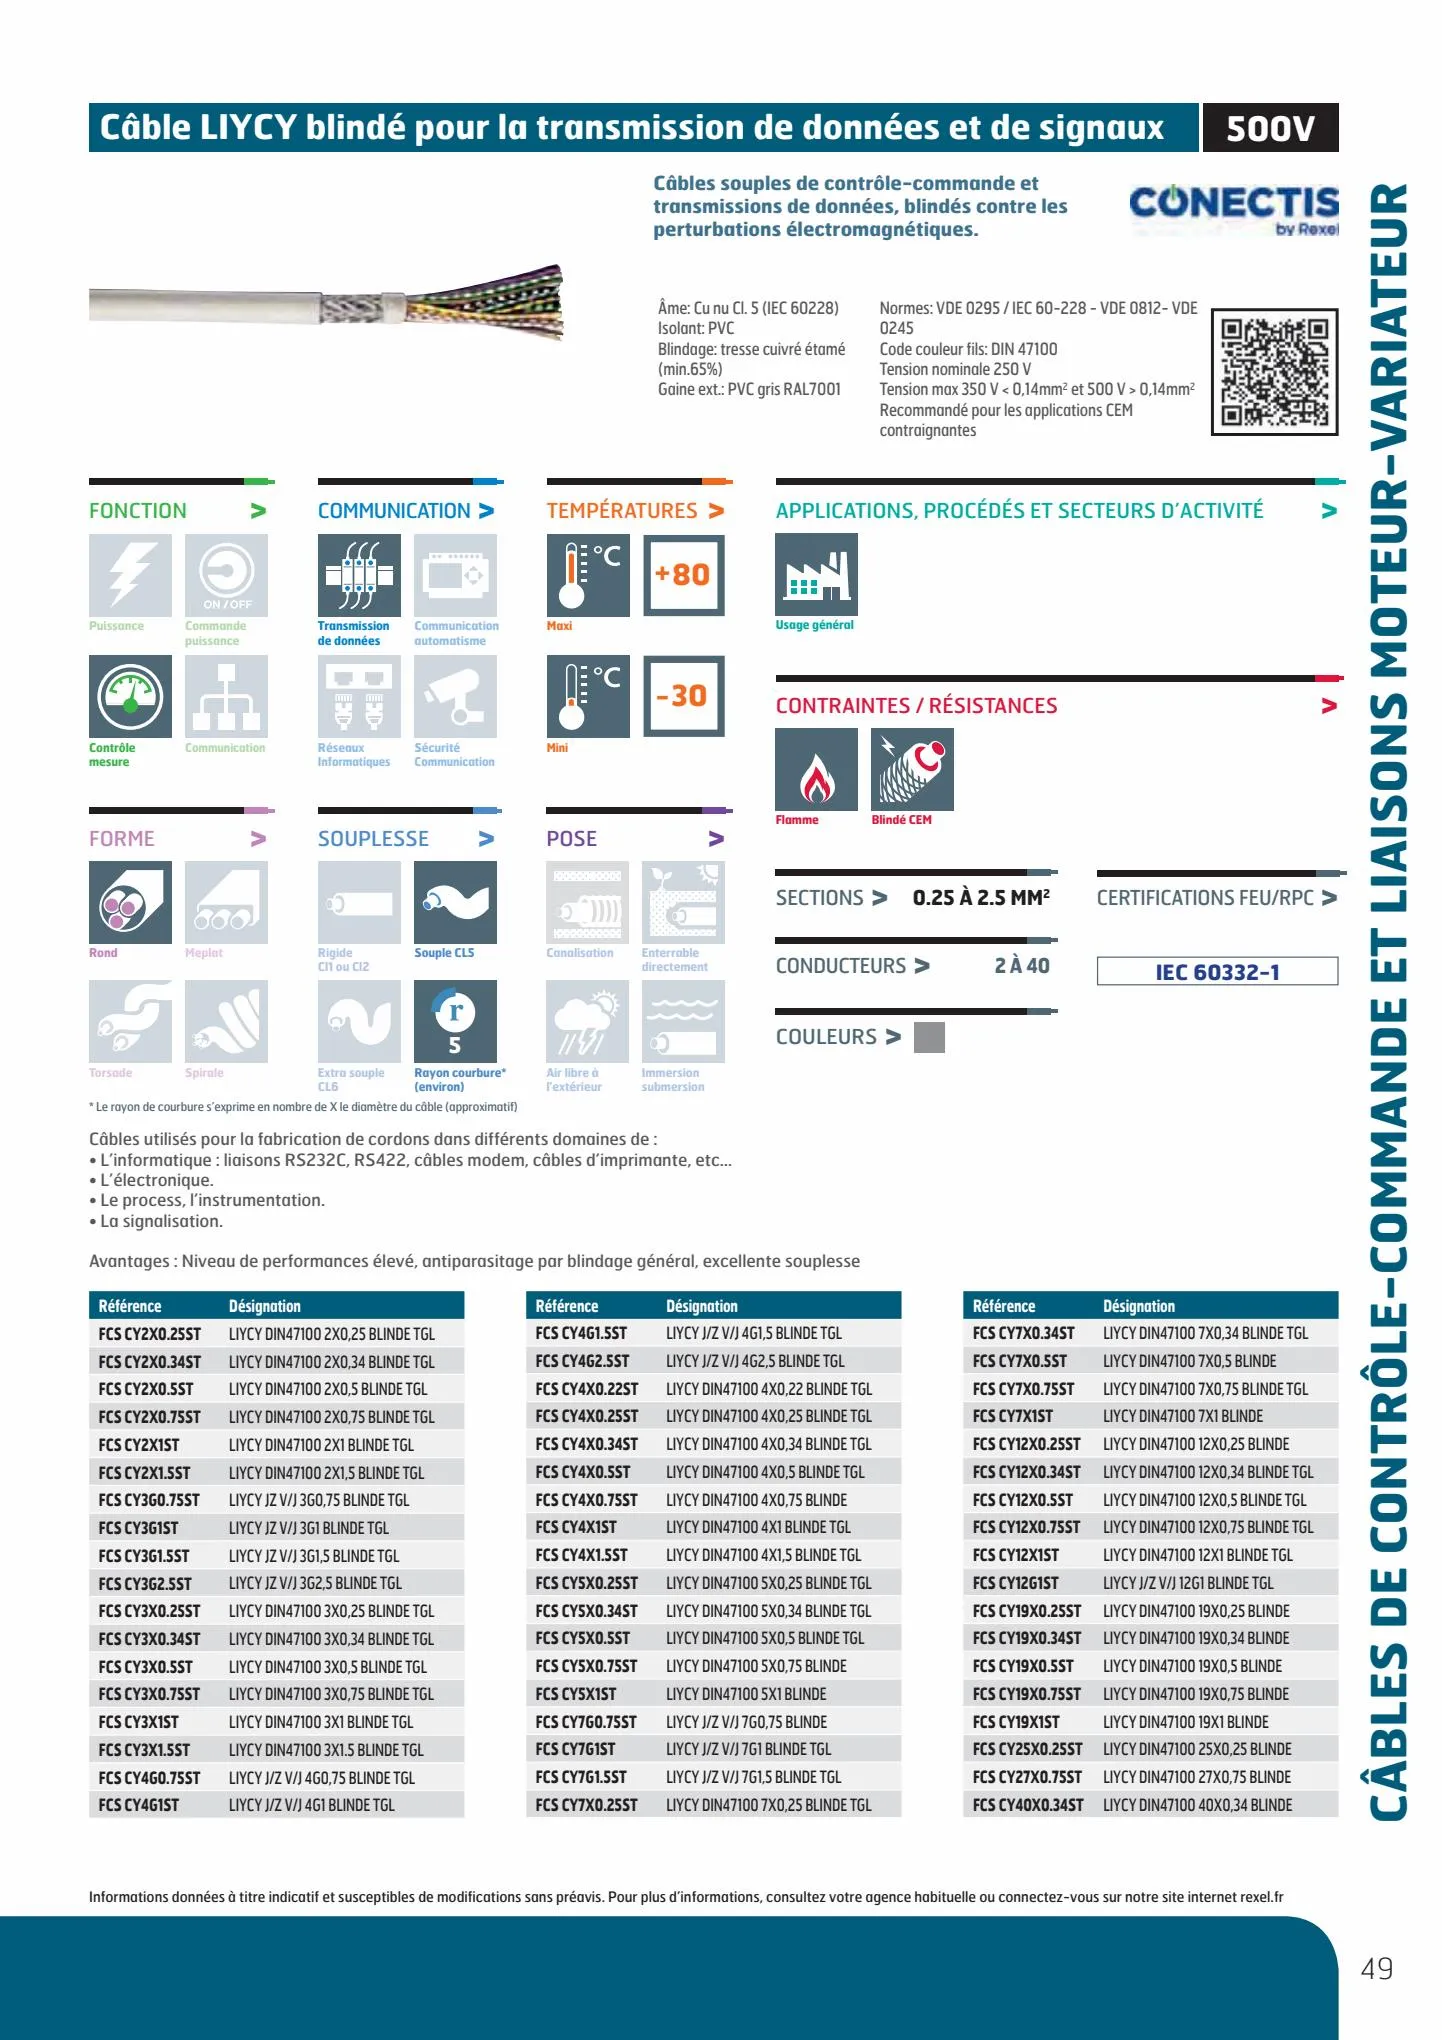 Catalogue Catalogue Rexel, page 00051